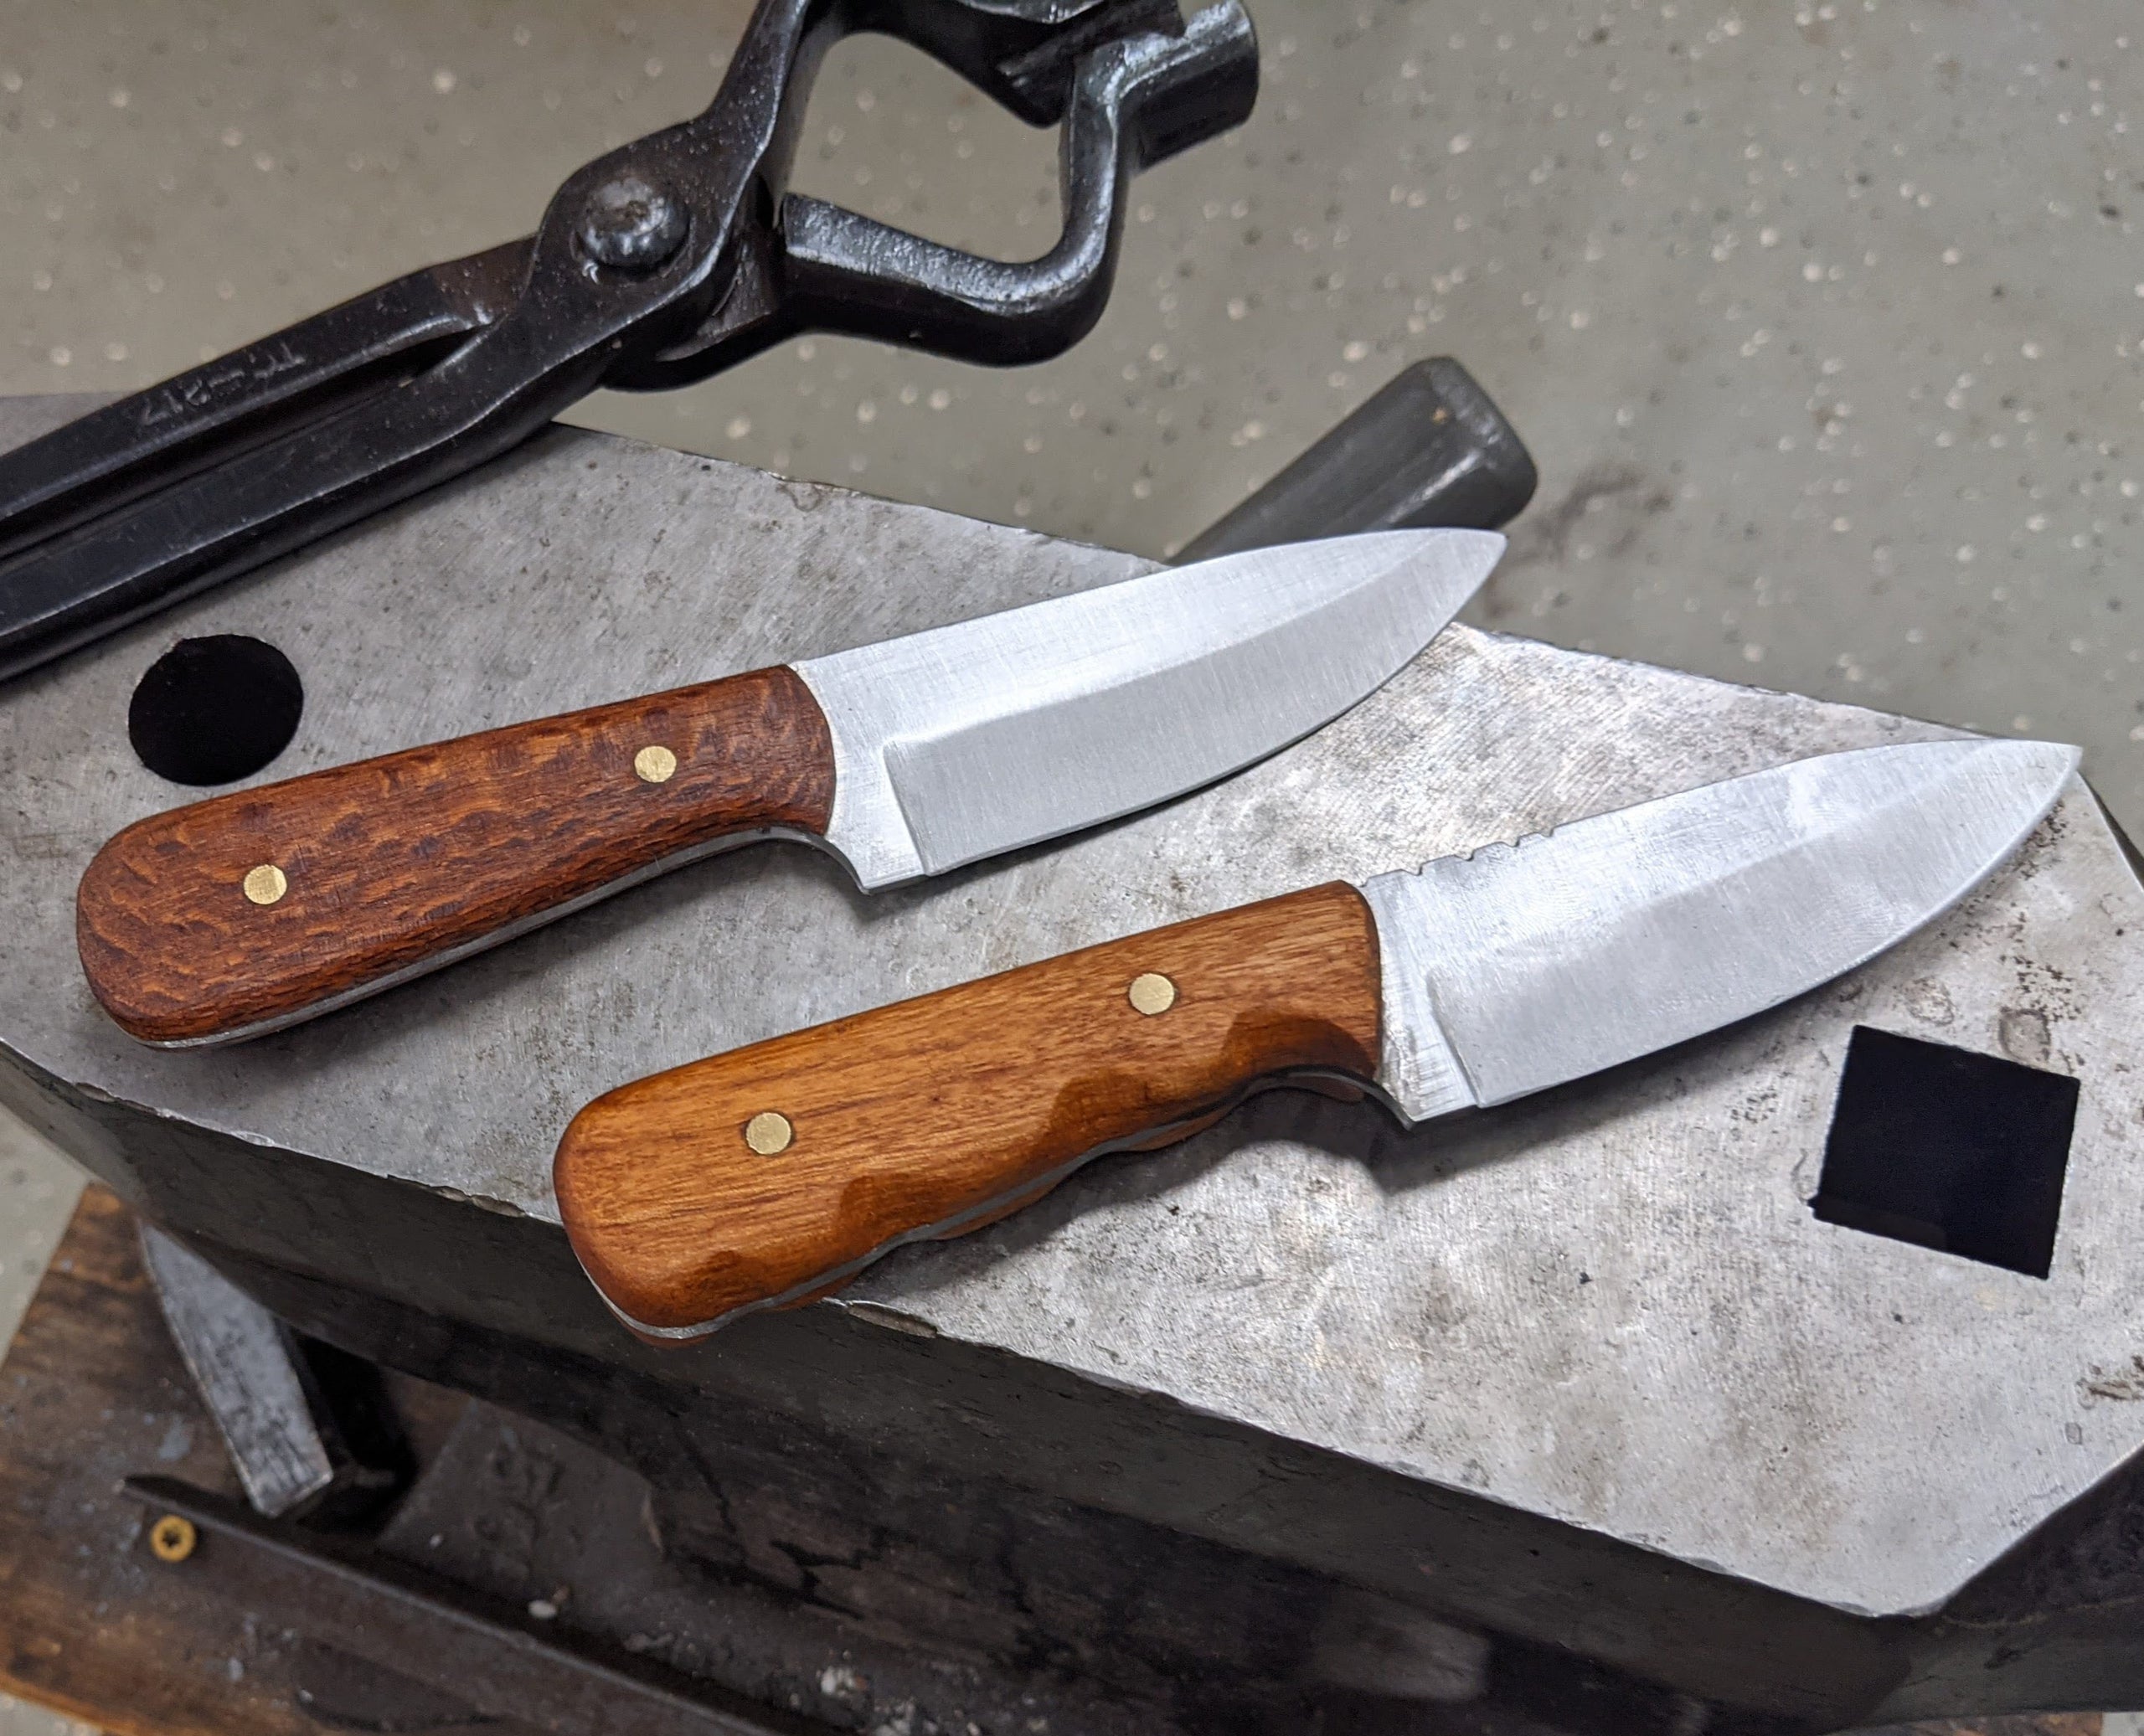 Blacksmith Knife Making Kit Plus Online Class DIY Knife Kit Supplies Metal  for Knife Making Steel Material Blacksmith Knife Tools 